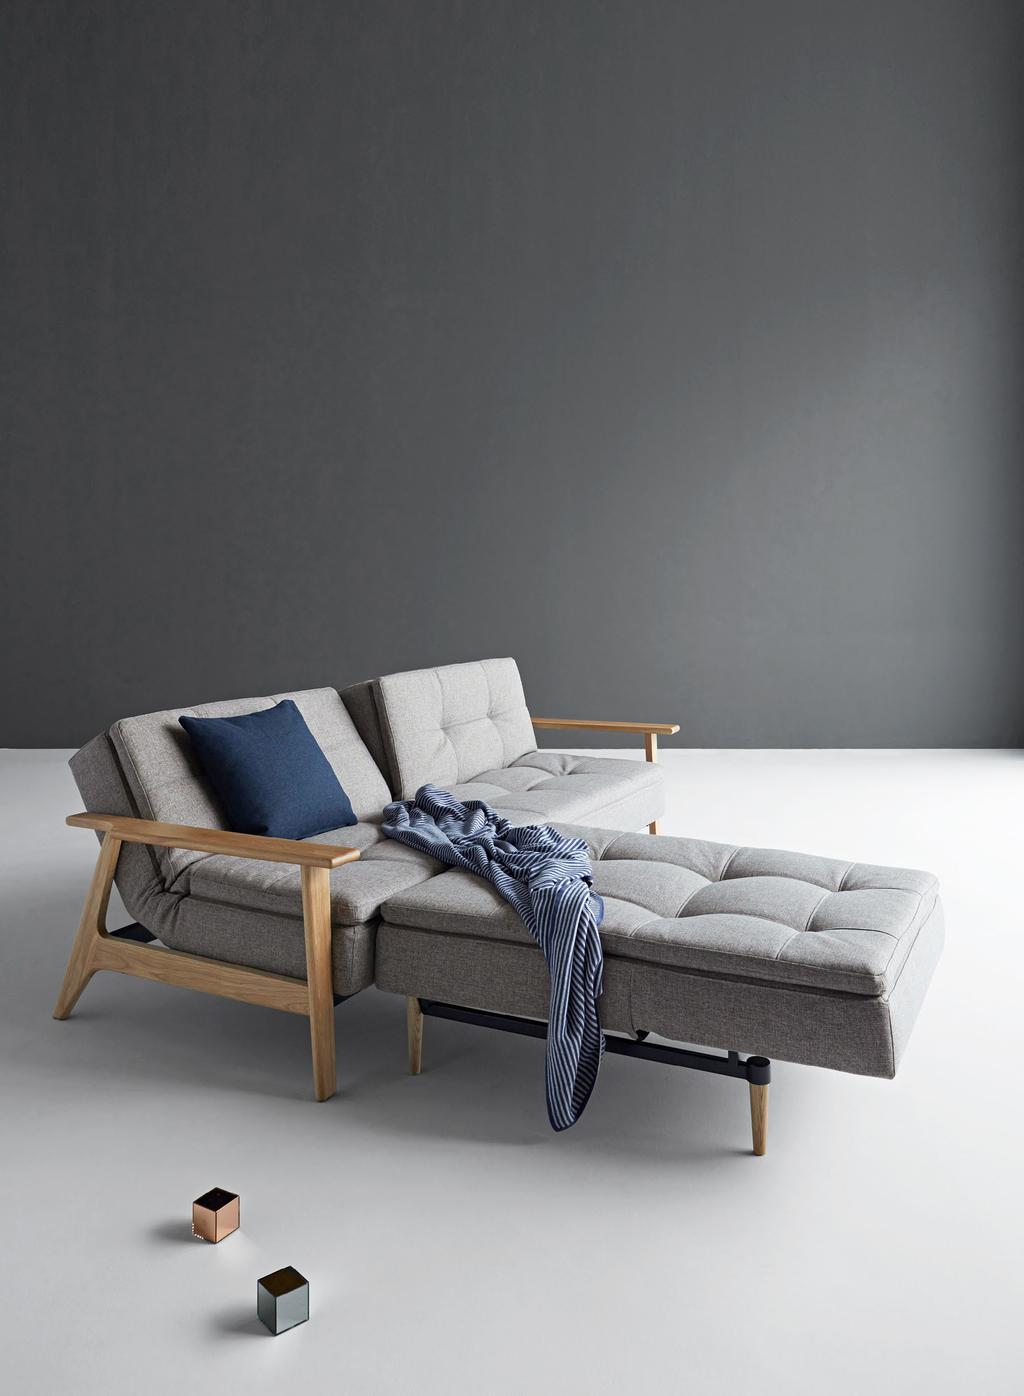 Dublexo Chair Design by Per Weiss The